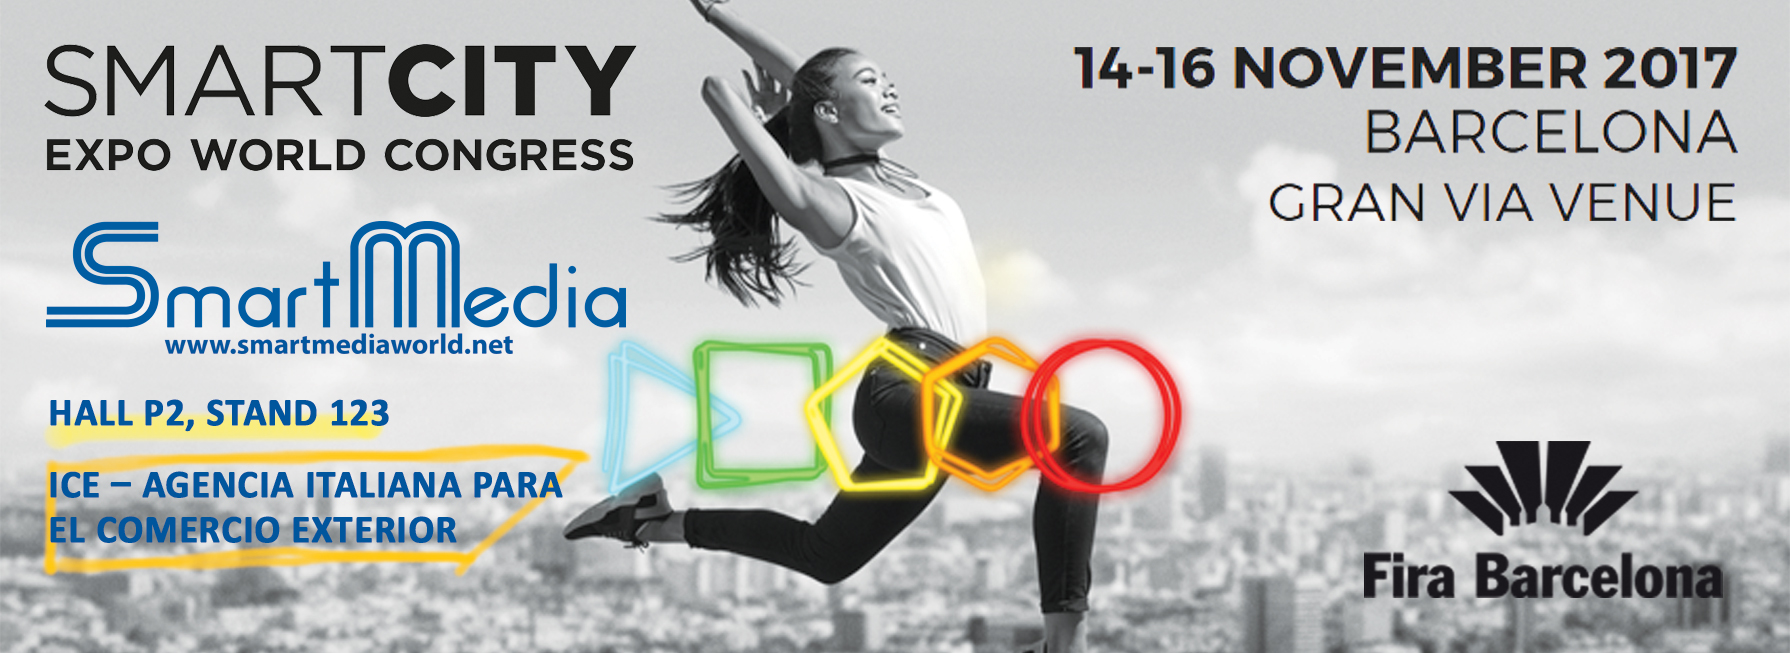 SmartMedia @SmartCity Expo World Congress